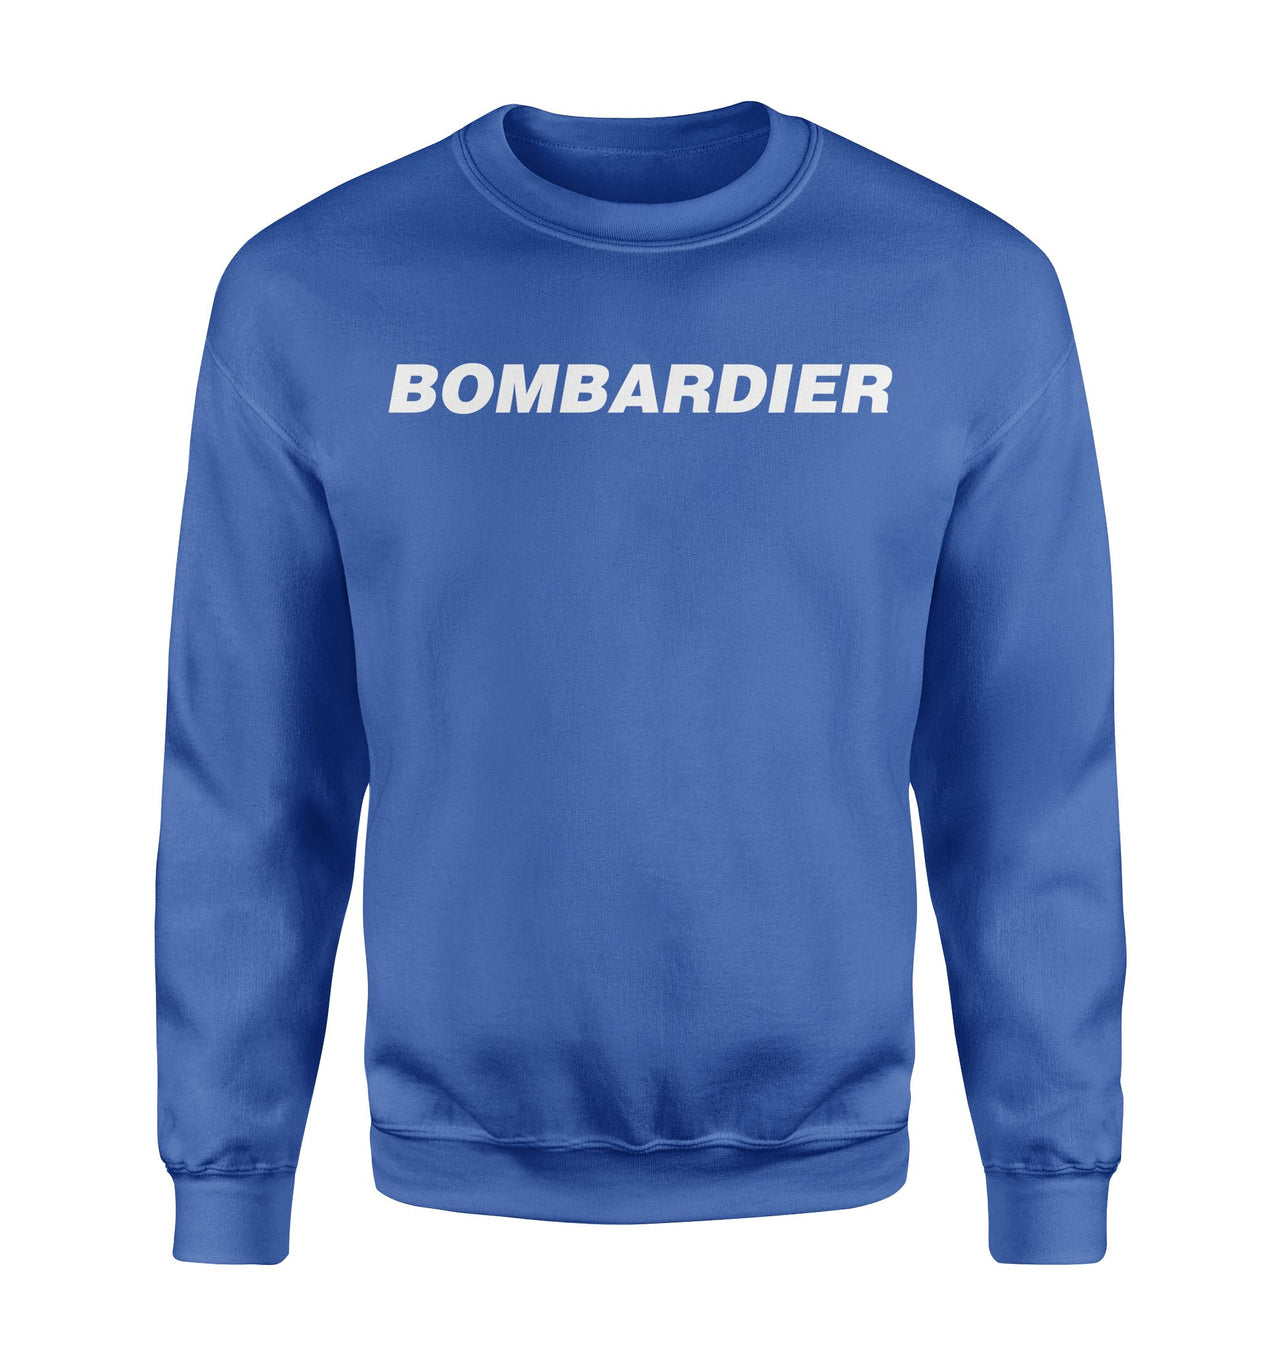 Bombardier & Text Designed Sweatshirts